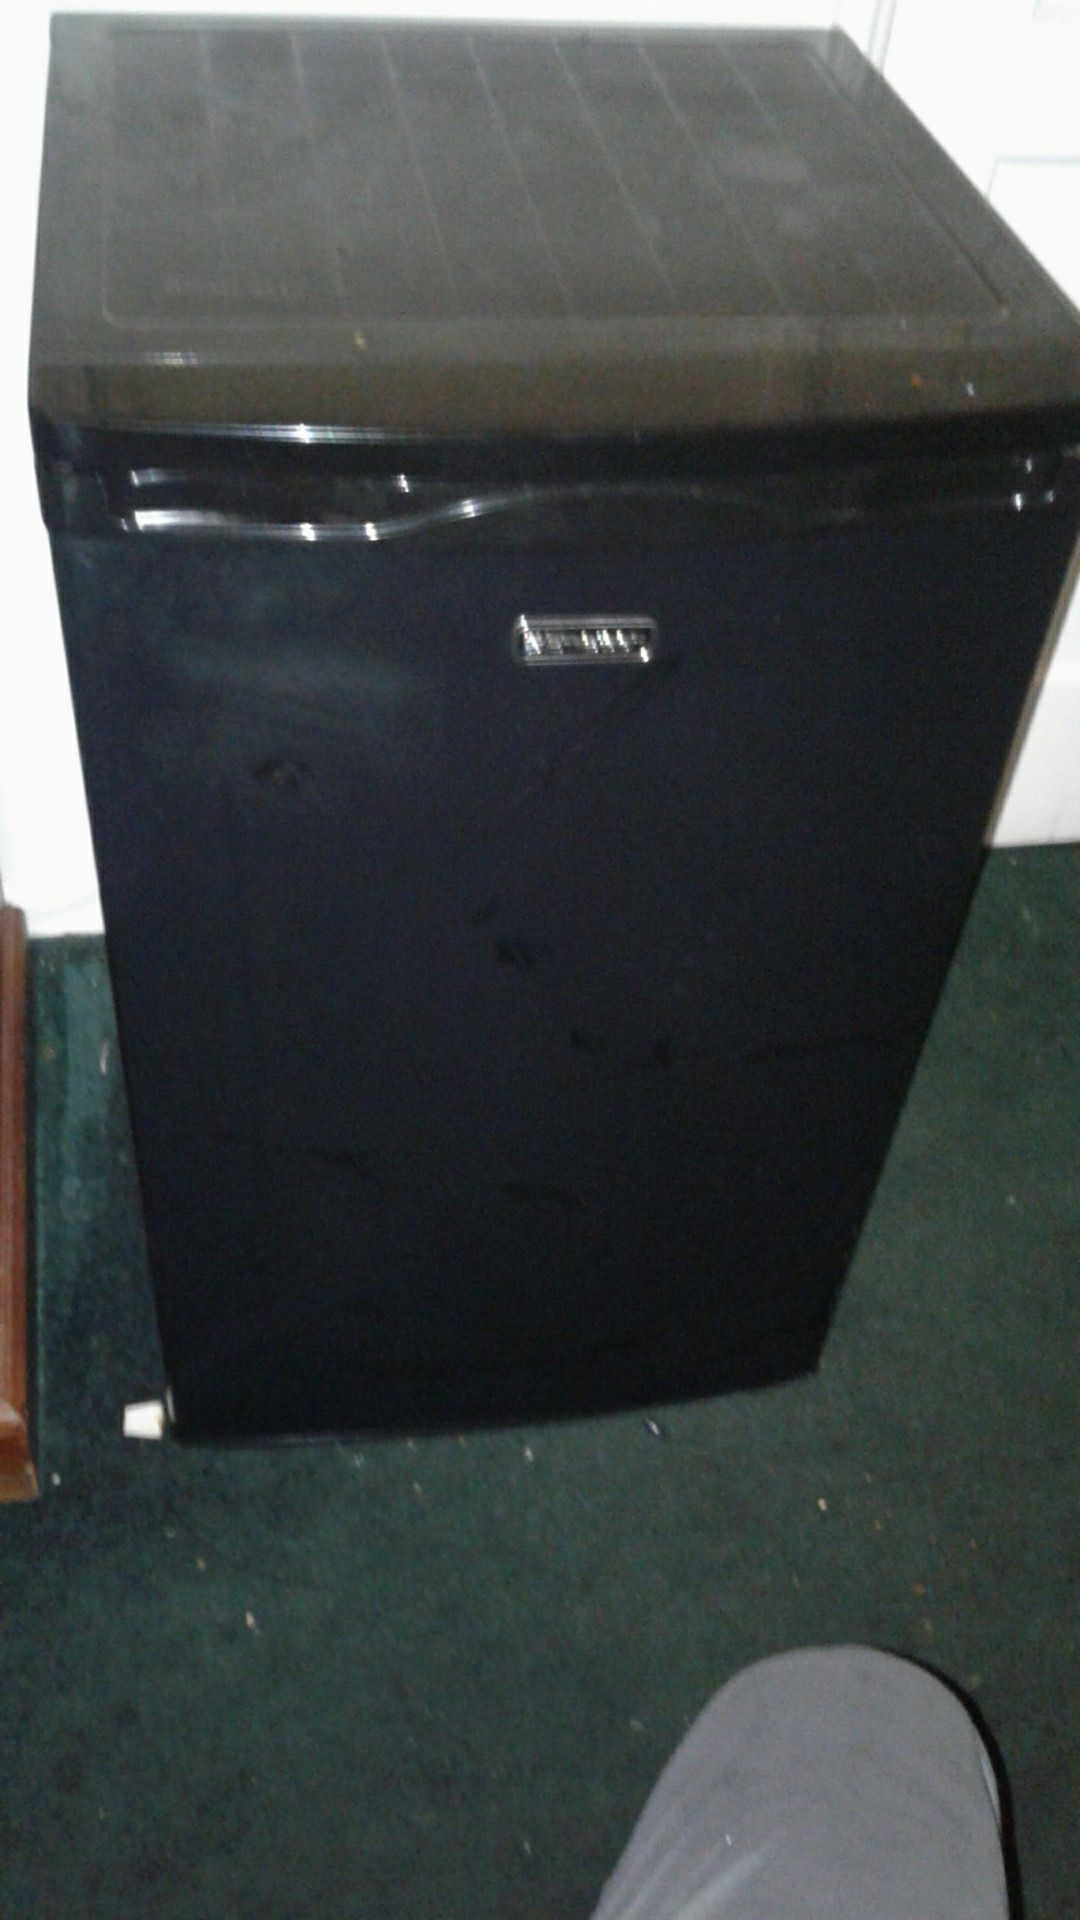 Emerson mini fridge with freezer